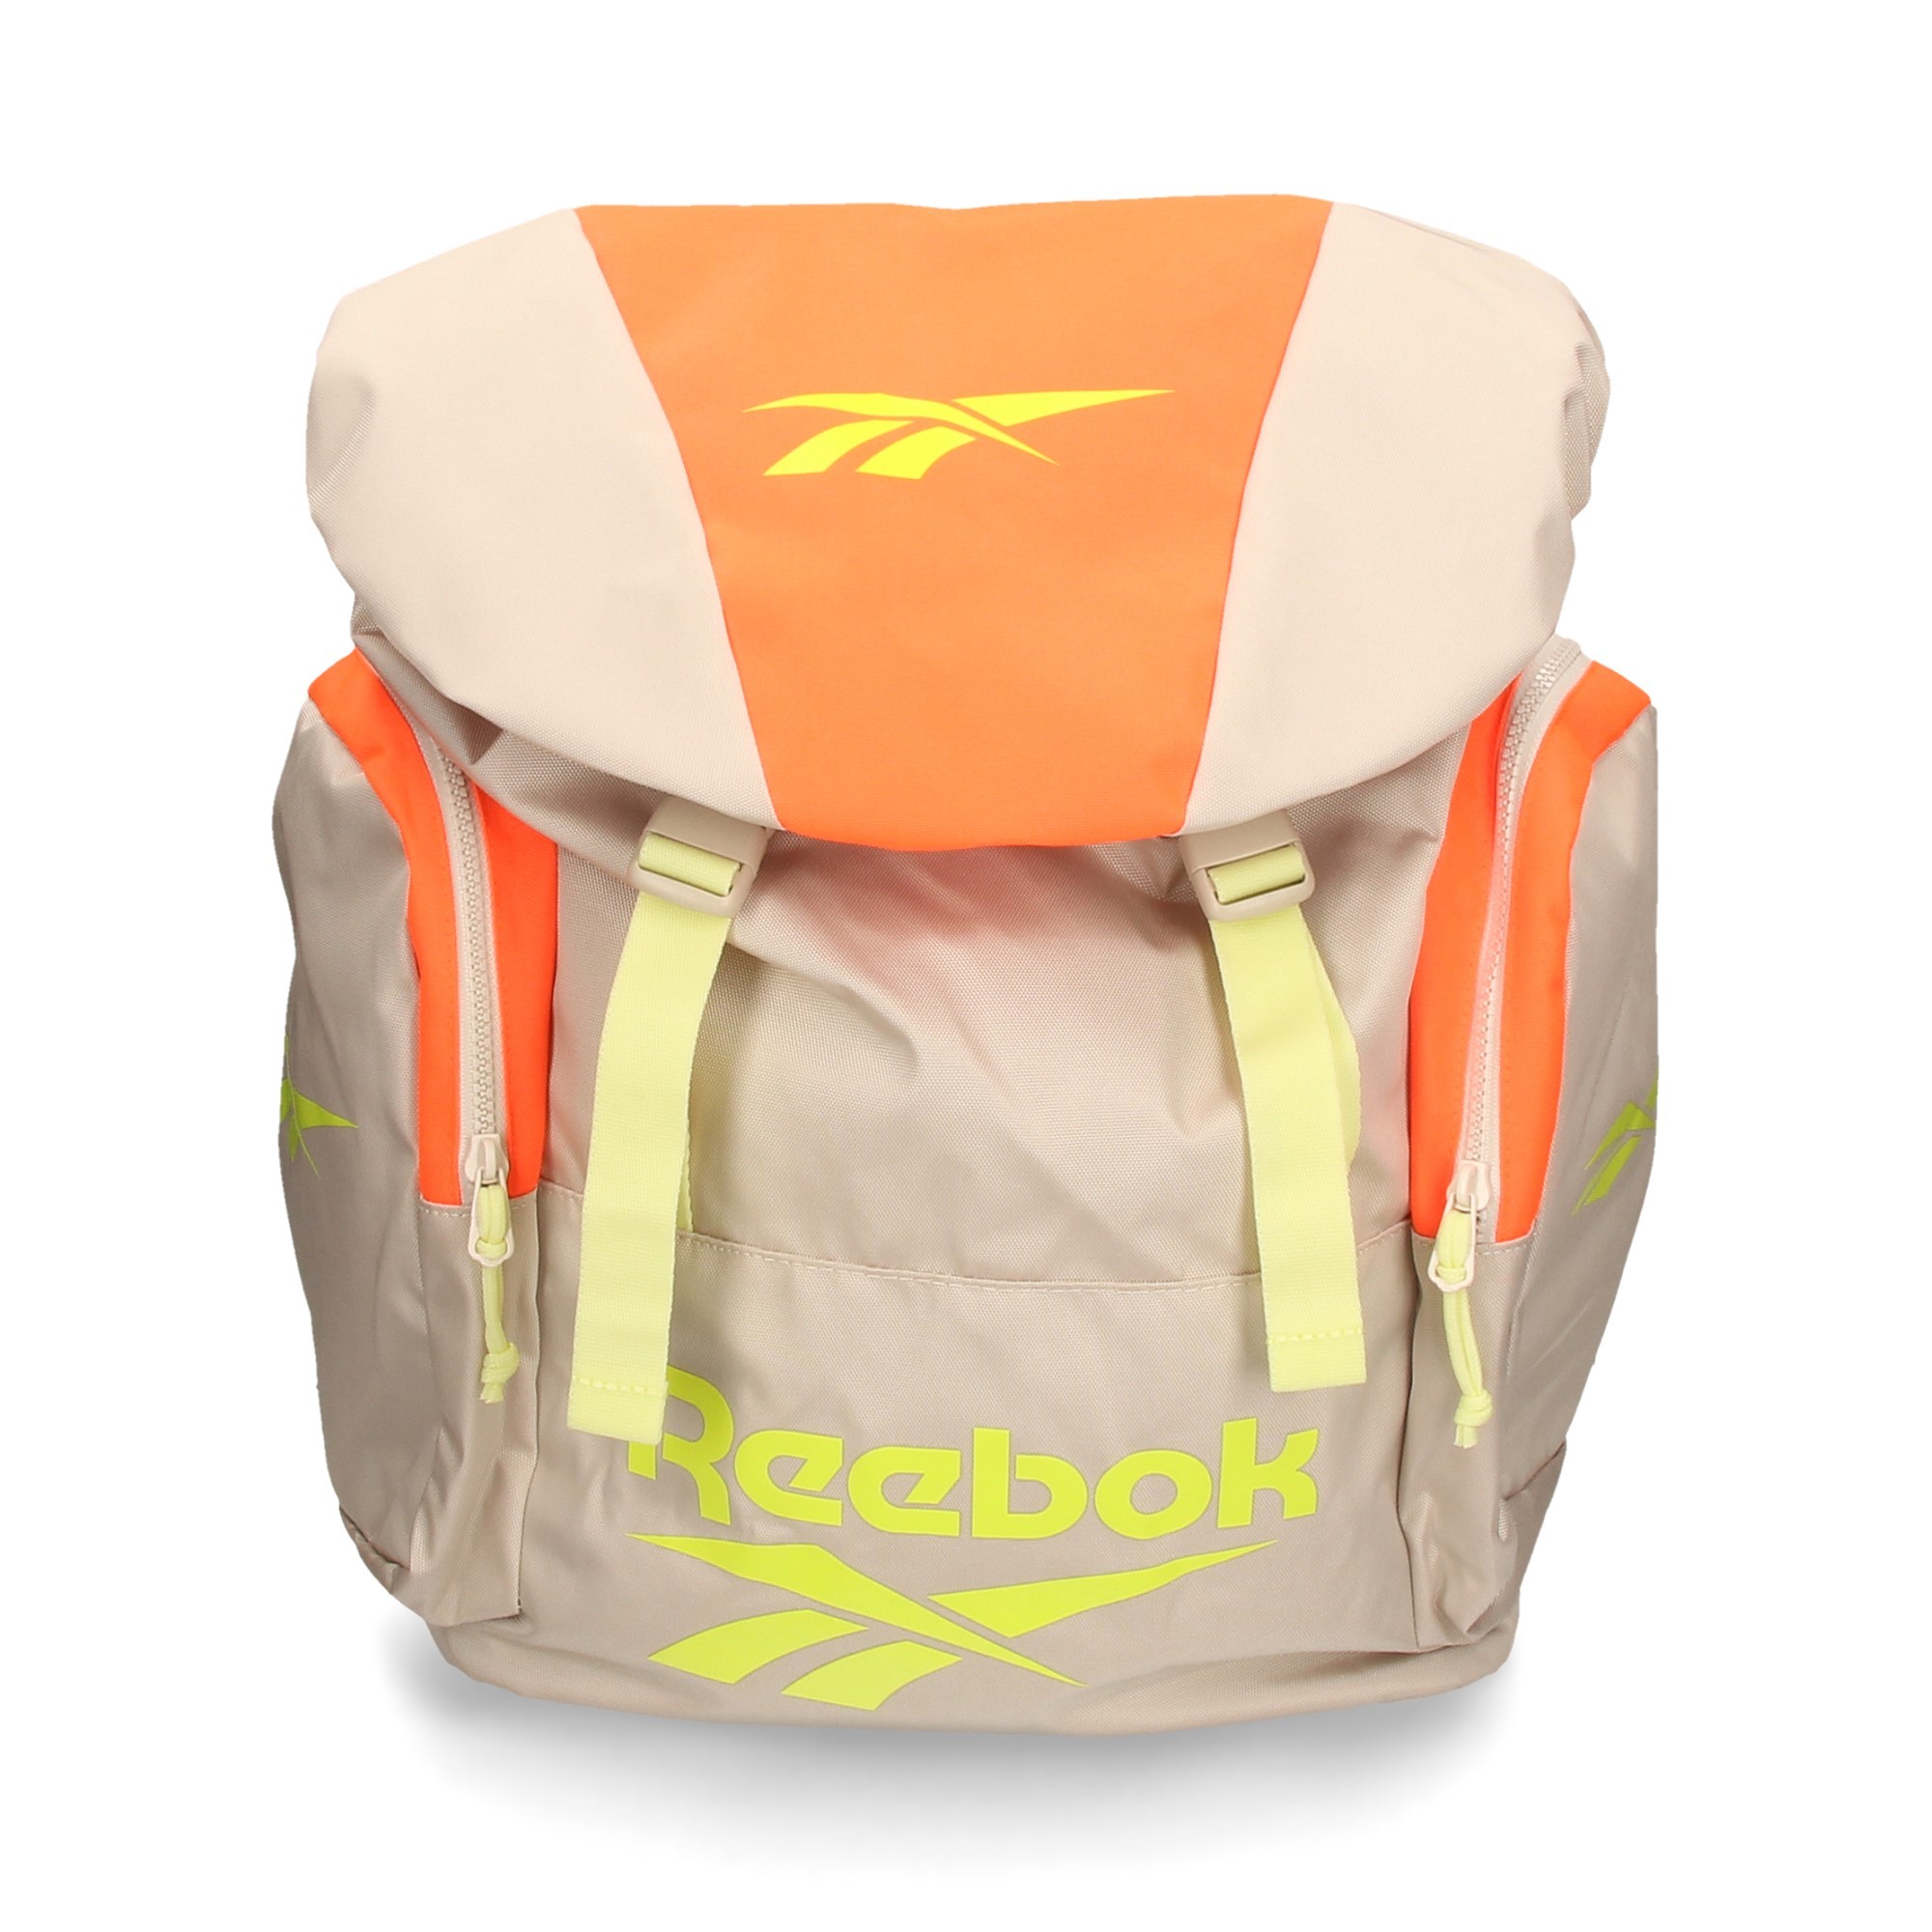 reebok backpack 2014